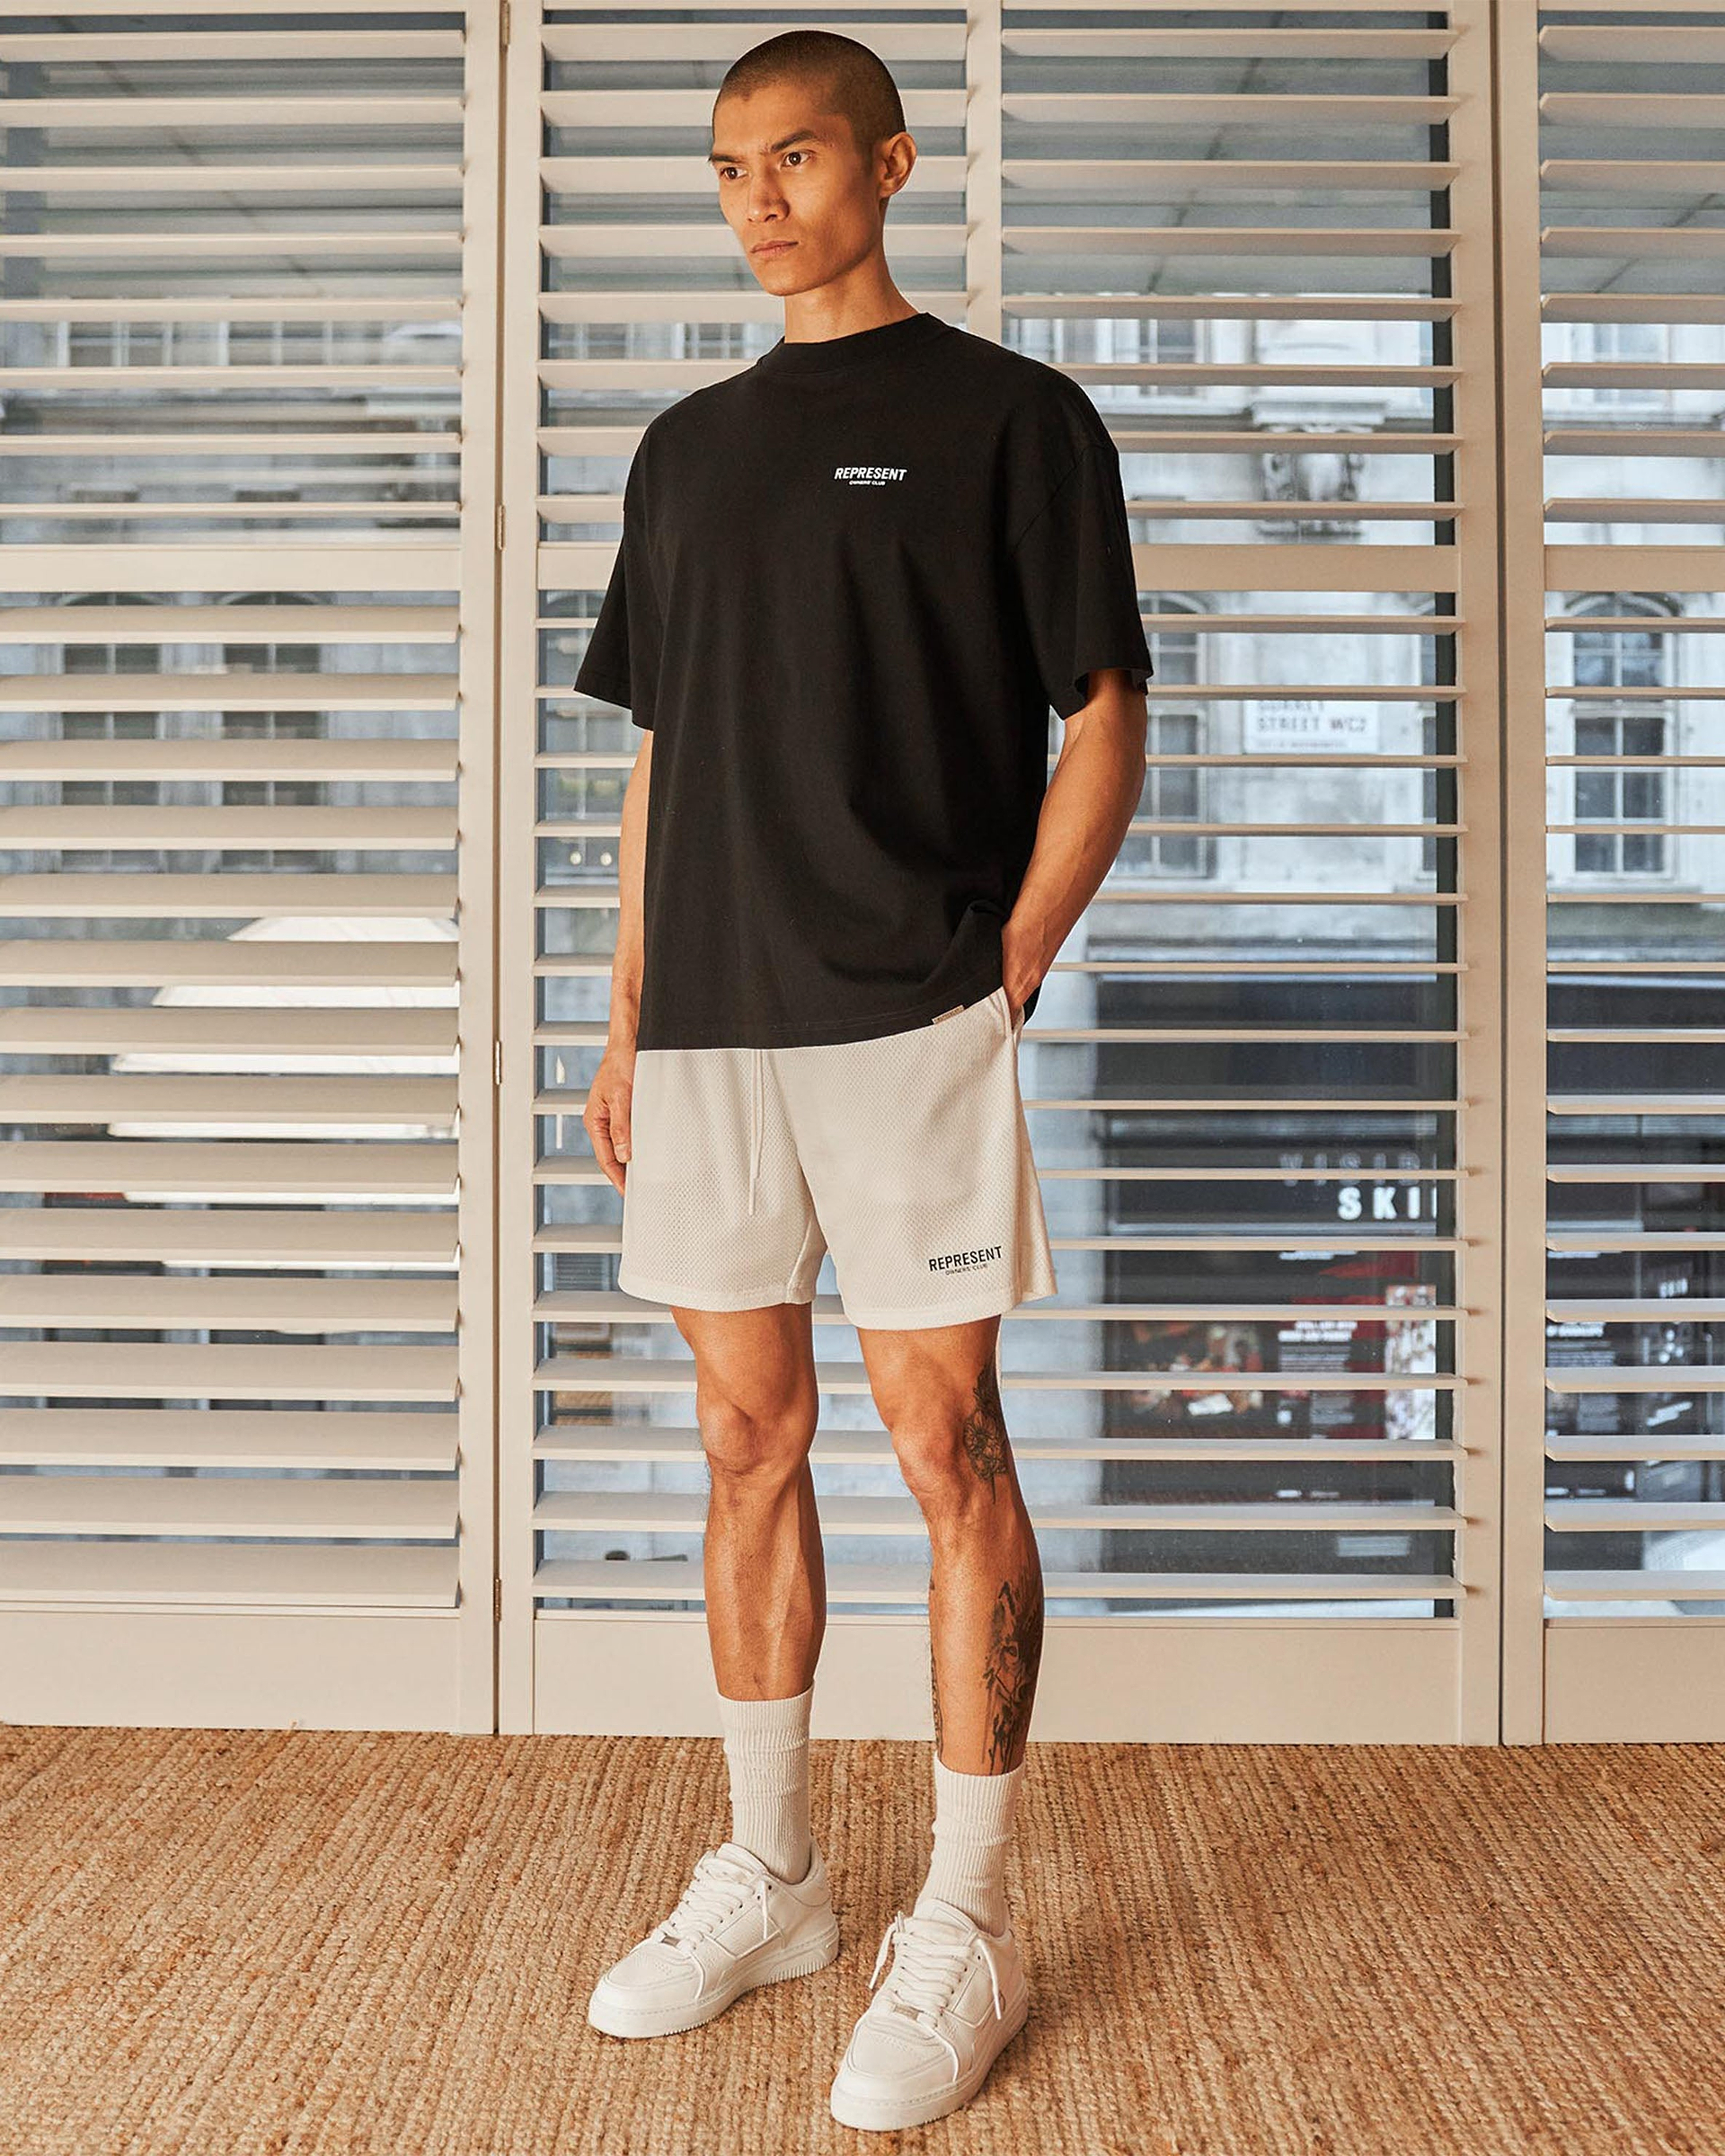 Represent Owners Club Mesh Shorts, Flat White Shorts